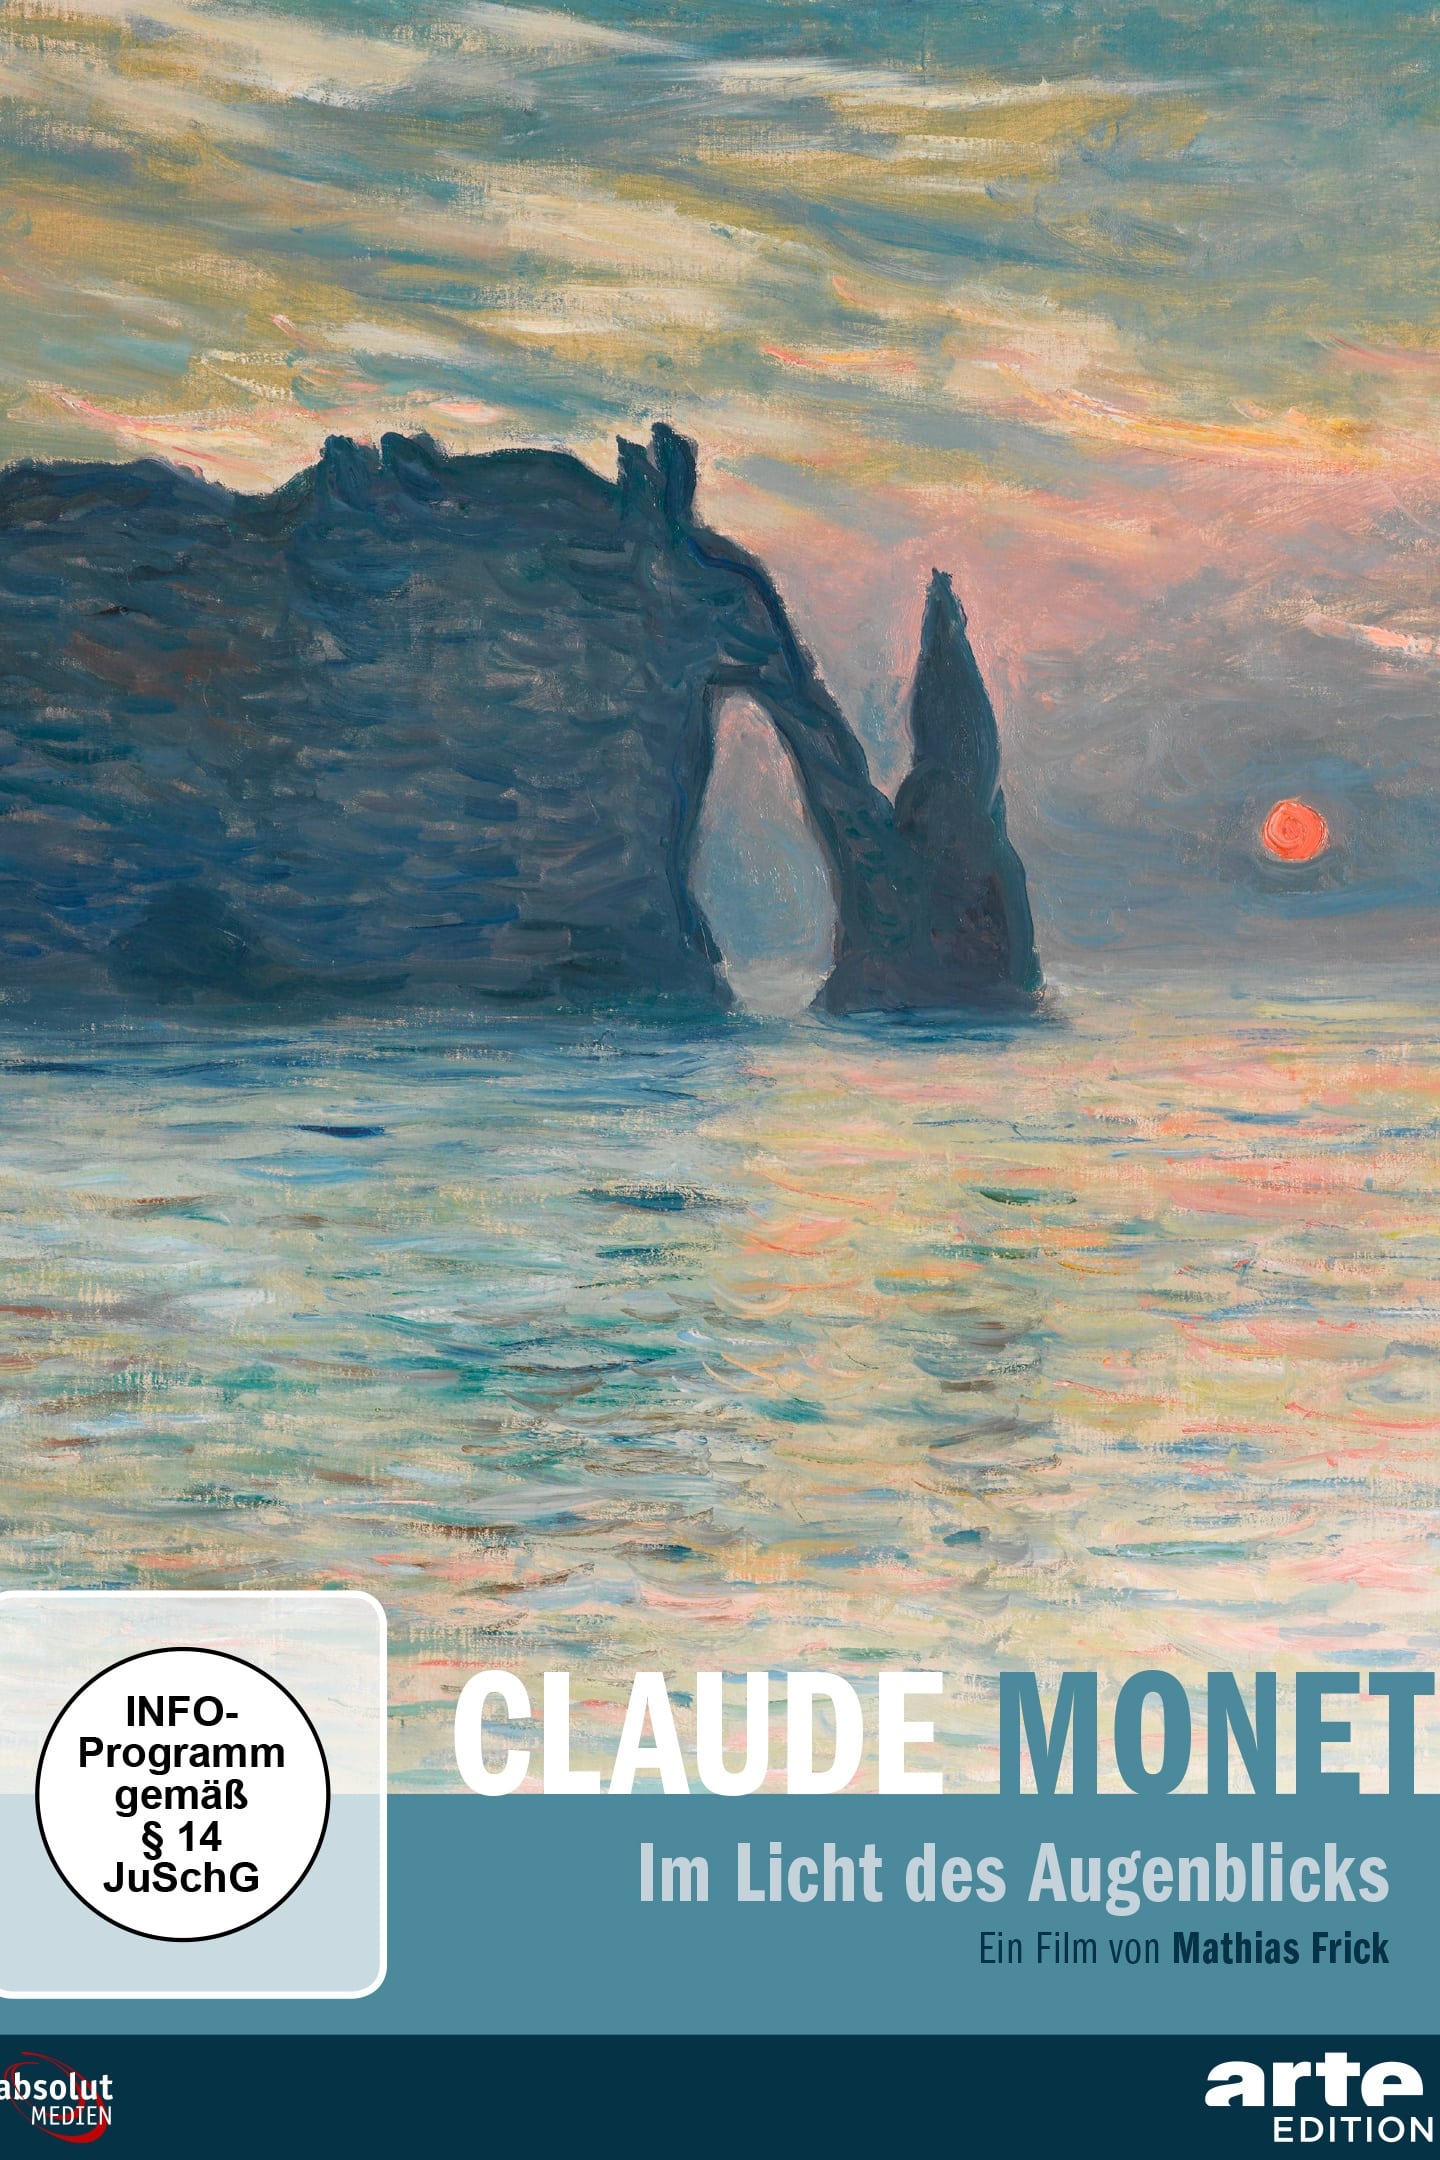 Claude Monet: Capturing a Moment